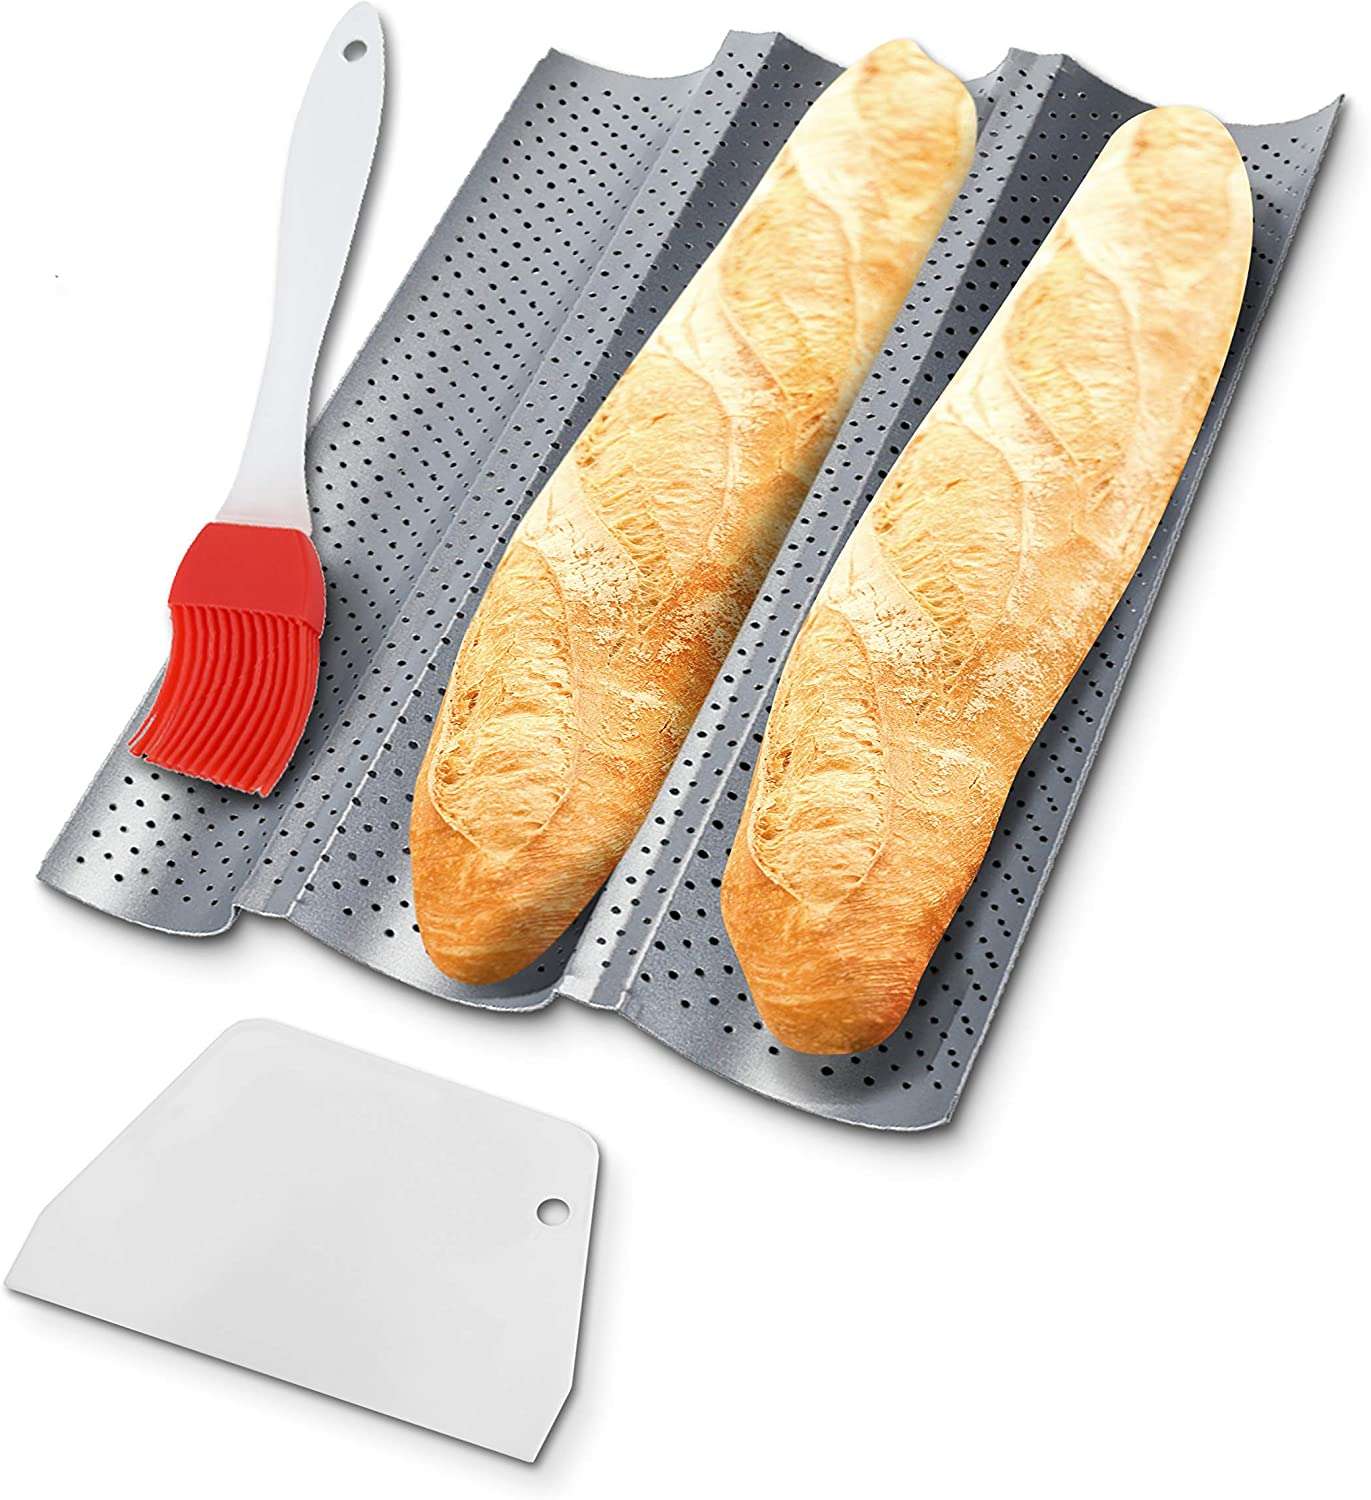 4. KOKIPRO French & Baguette Bread Pan